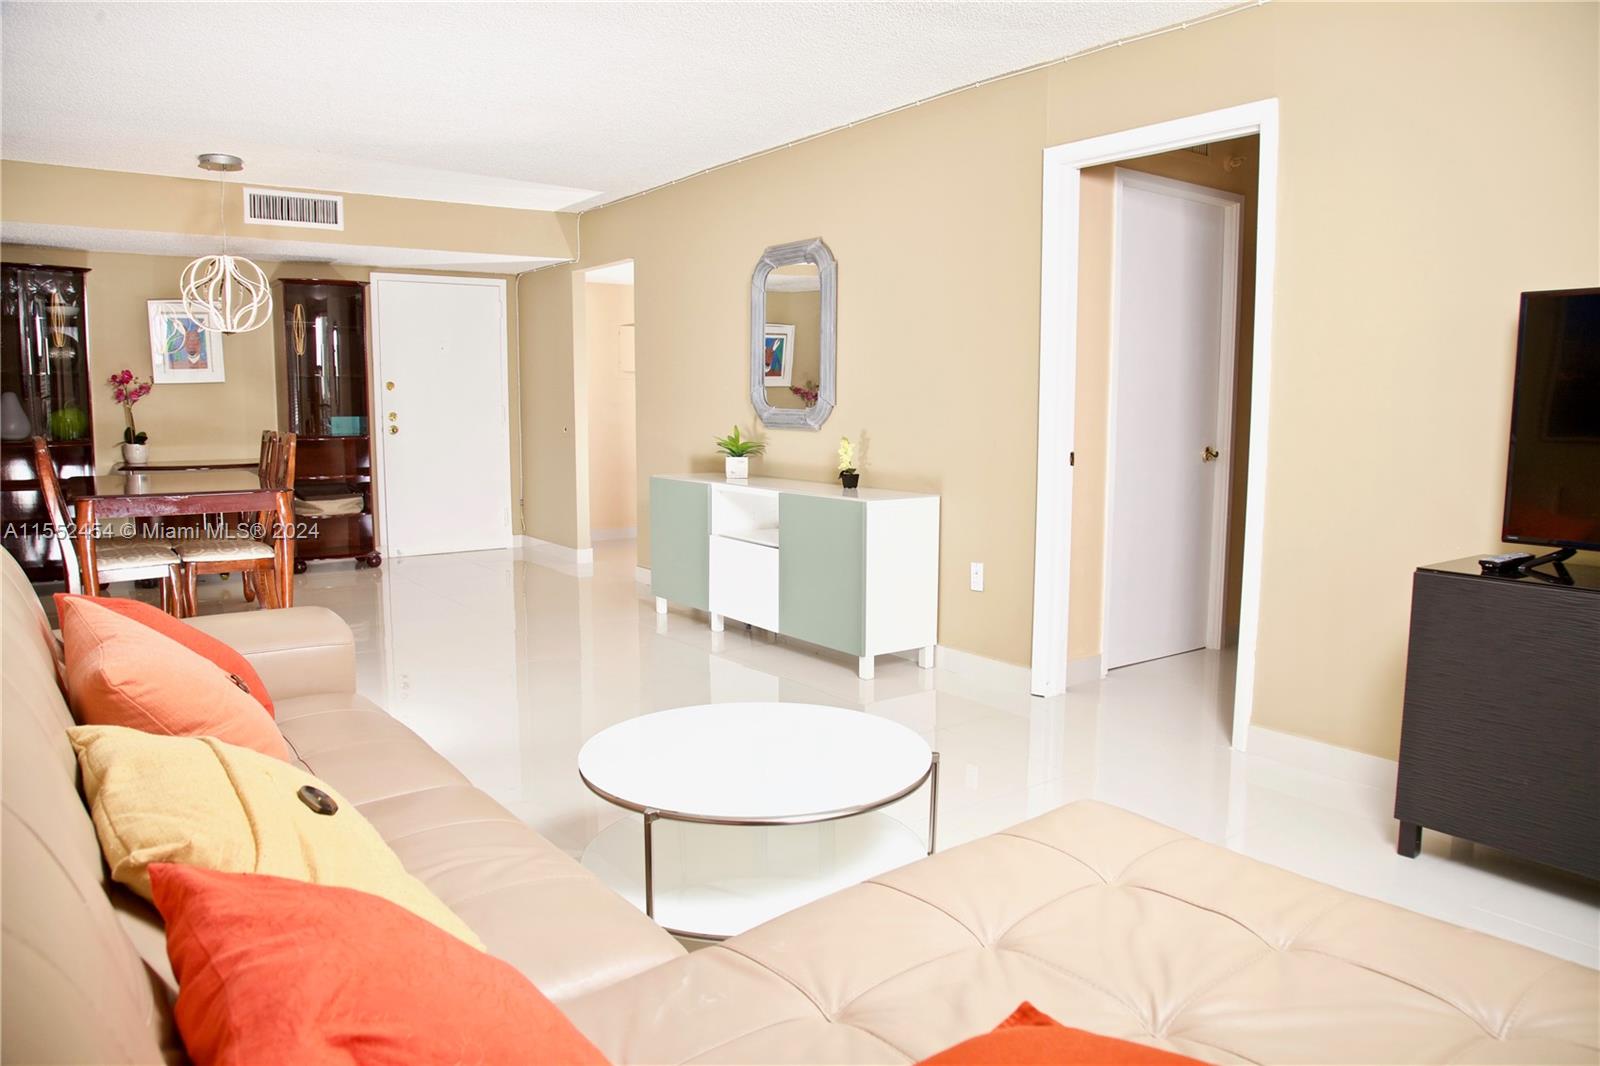 Rental Property at 210 174th St 1107, Sunny Isles Beach, Miami-Dade County, Florida - Bedrooms: 2 
Bathrooms: 2  - $2,800 MO.